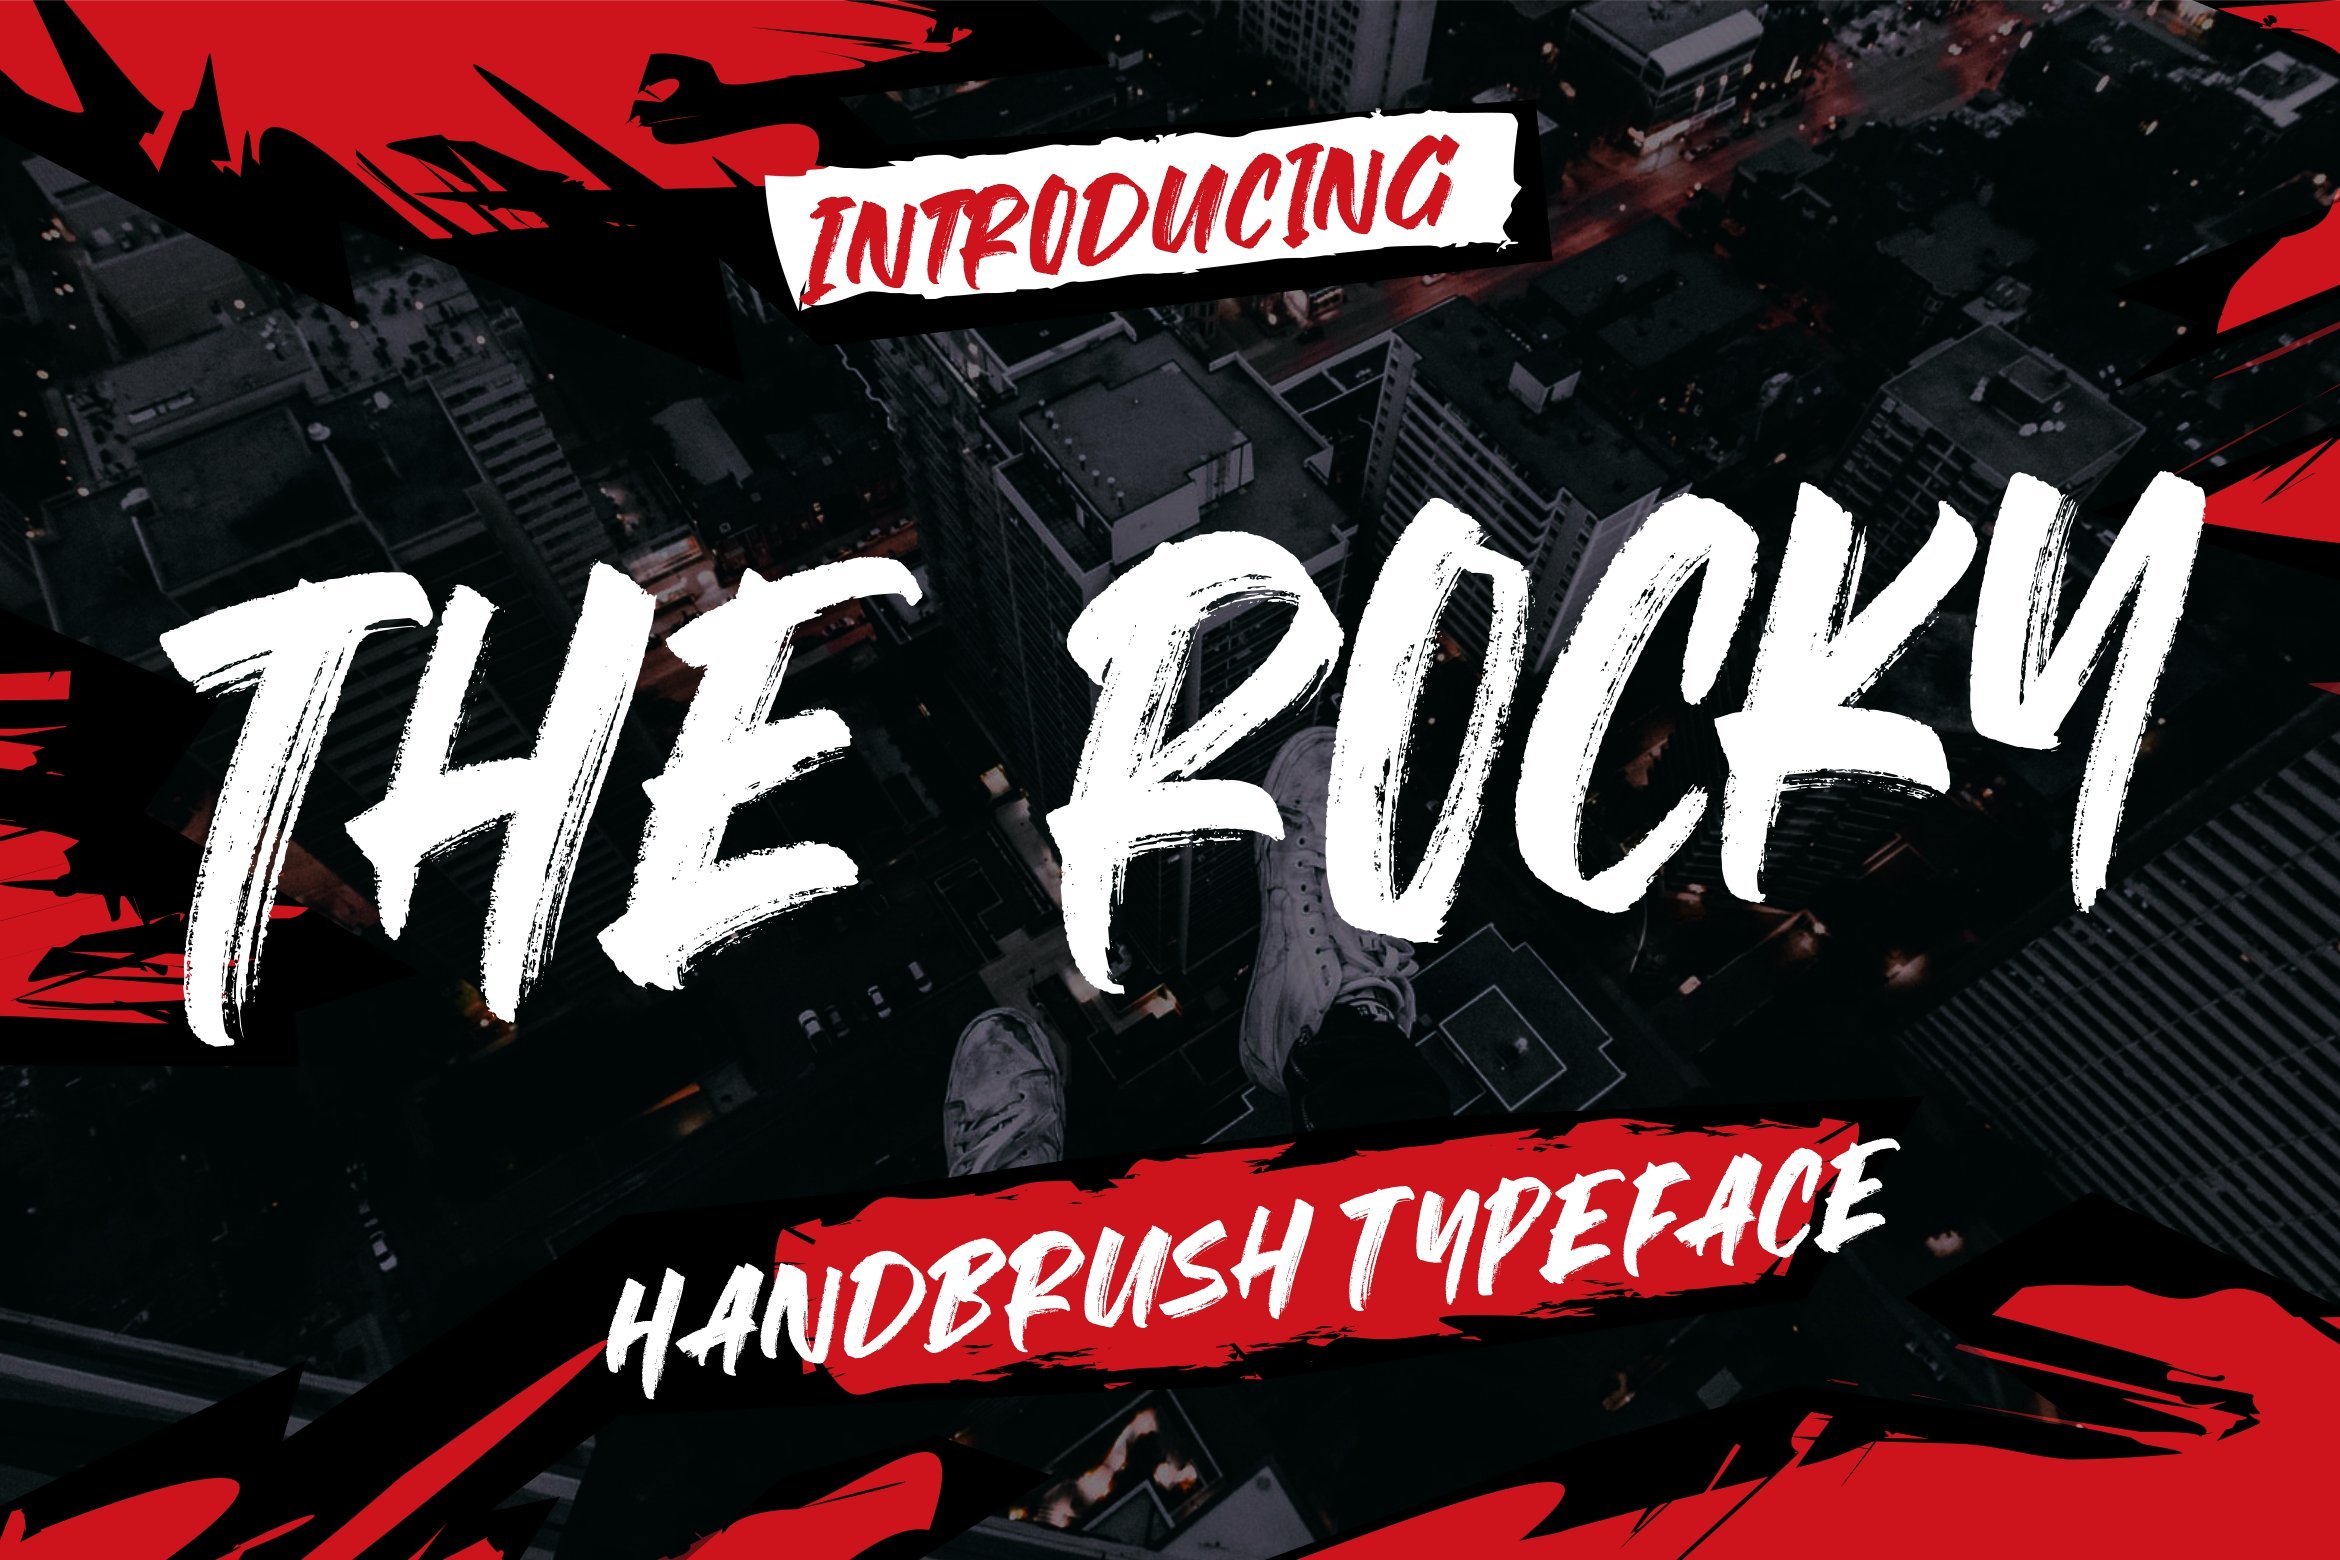 The Rocky Handbrush Typeface cover image.